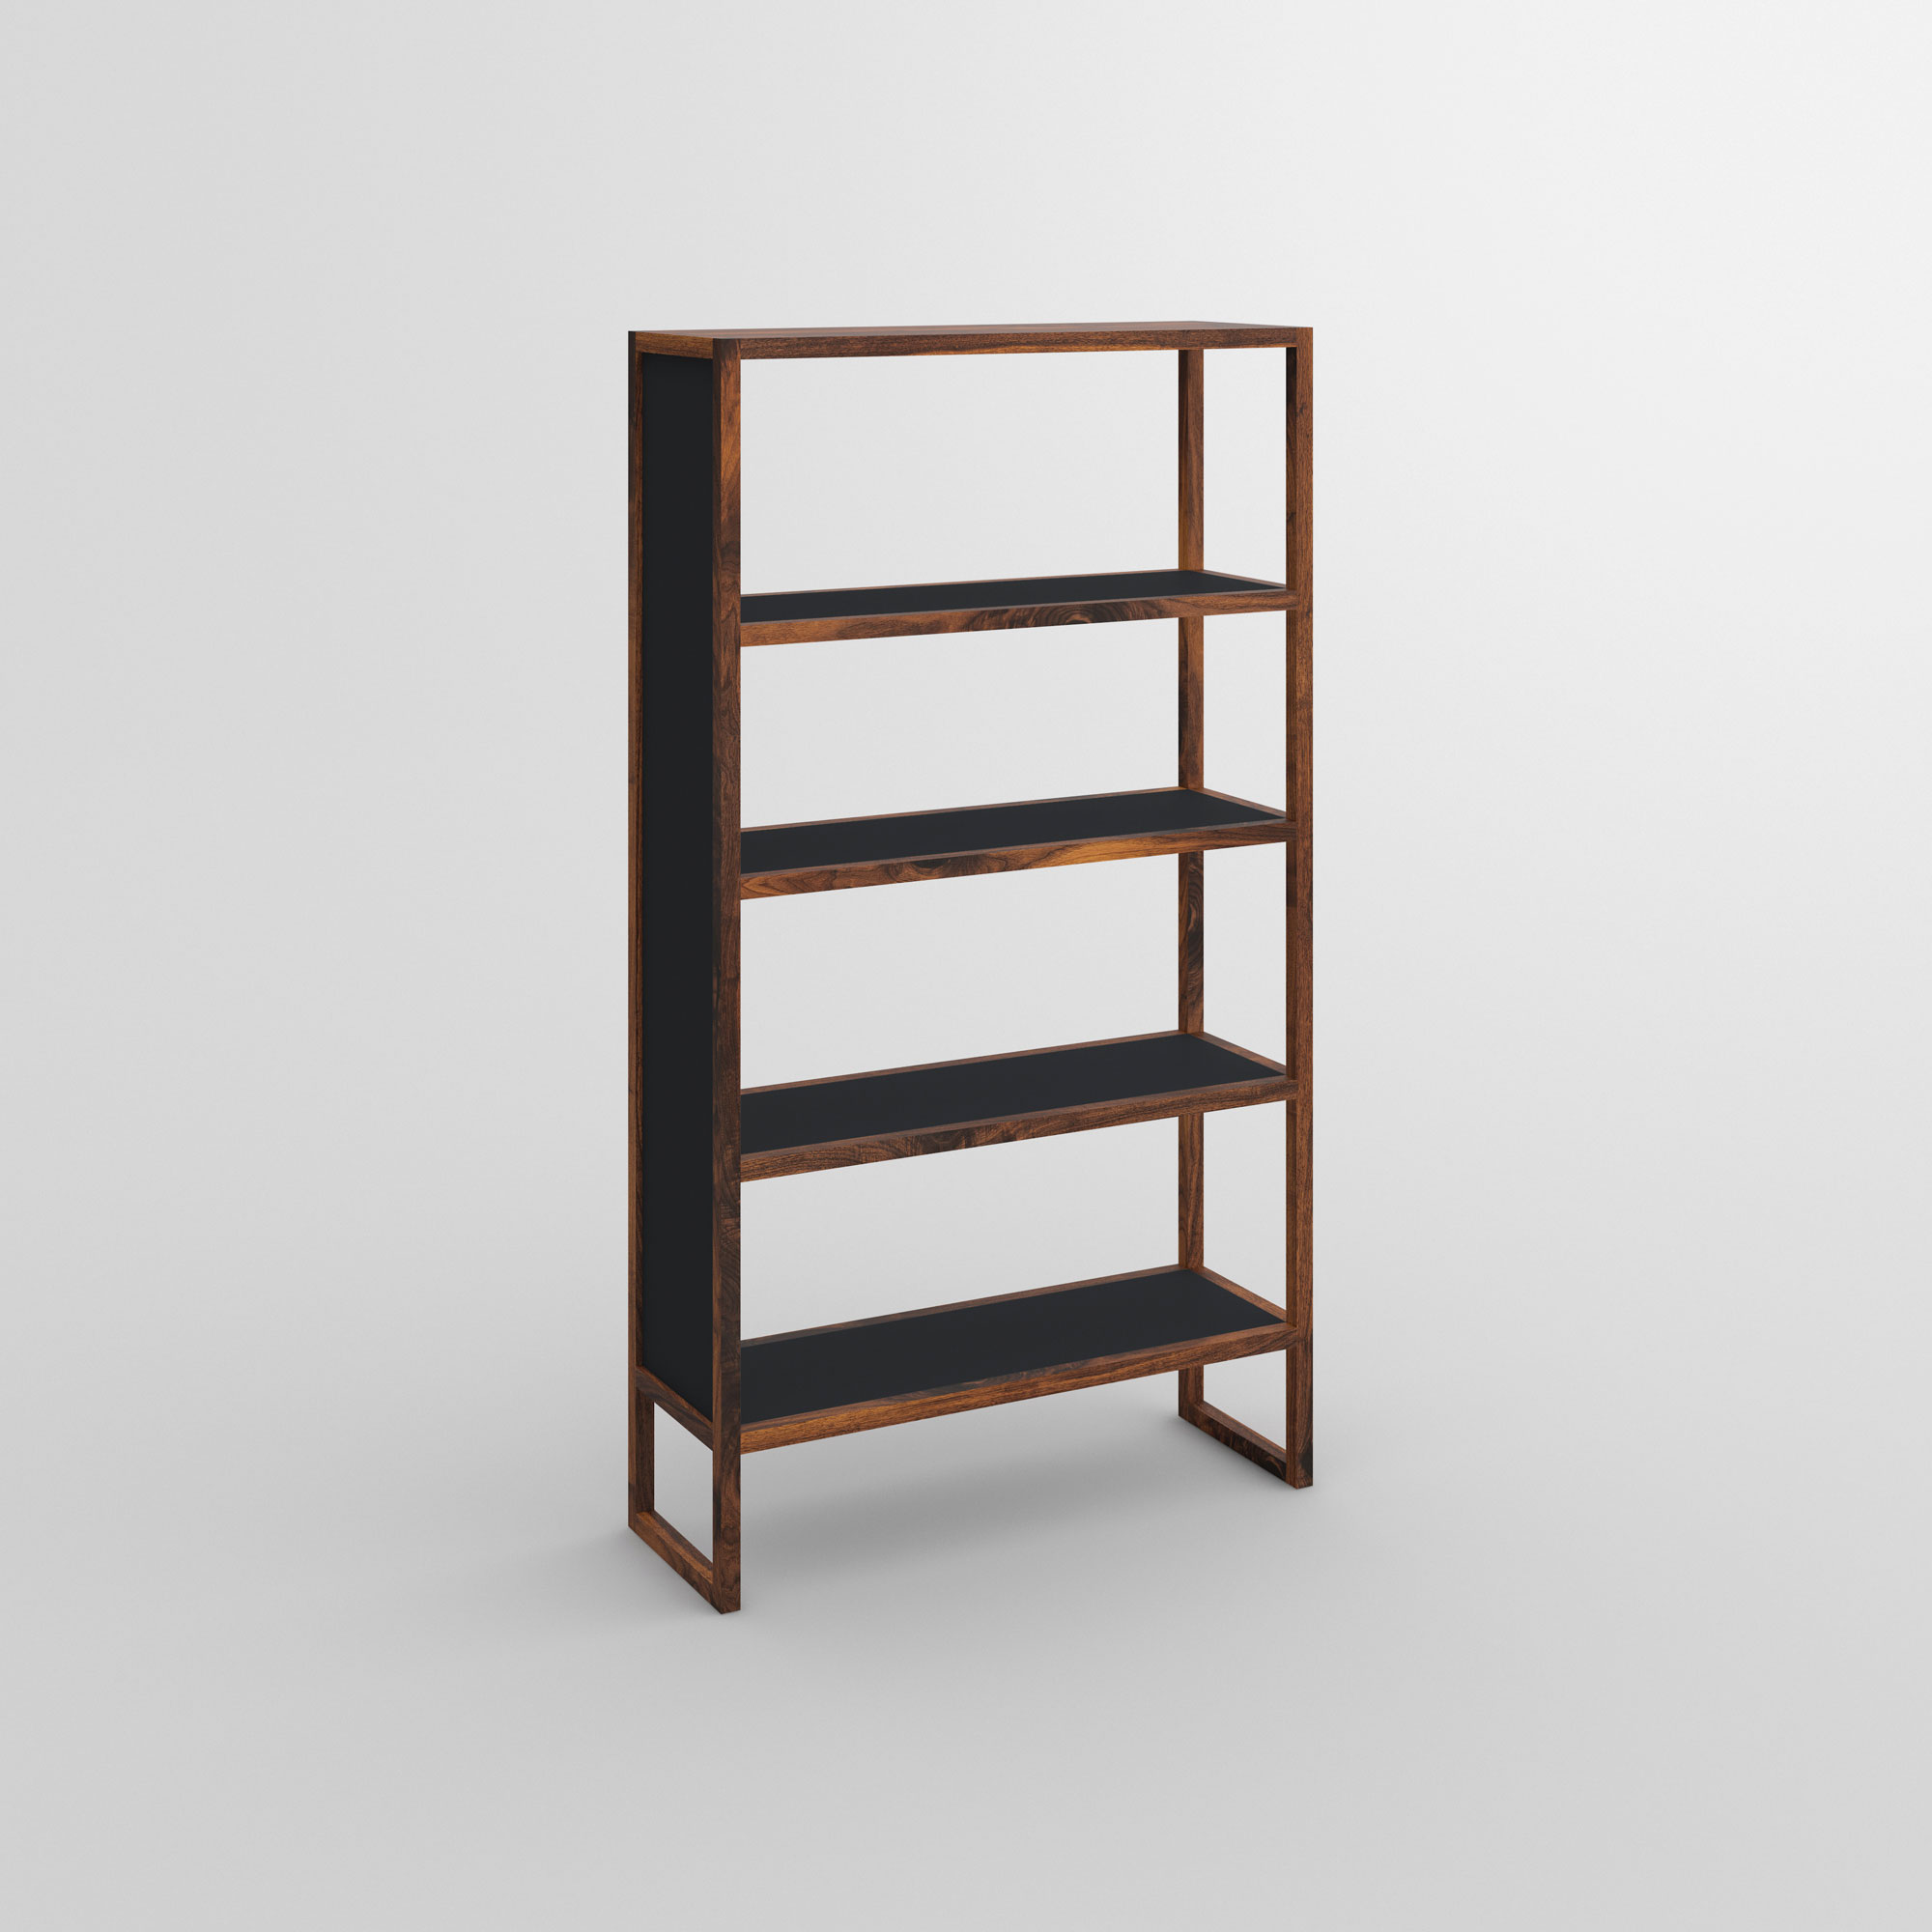 Linoleum Wood Shelf SENA cam1 custom made in solid wood by vitamin design